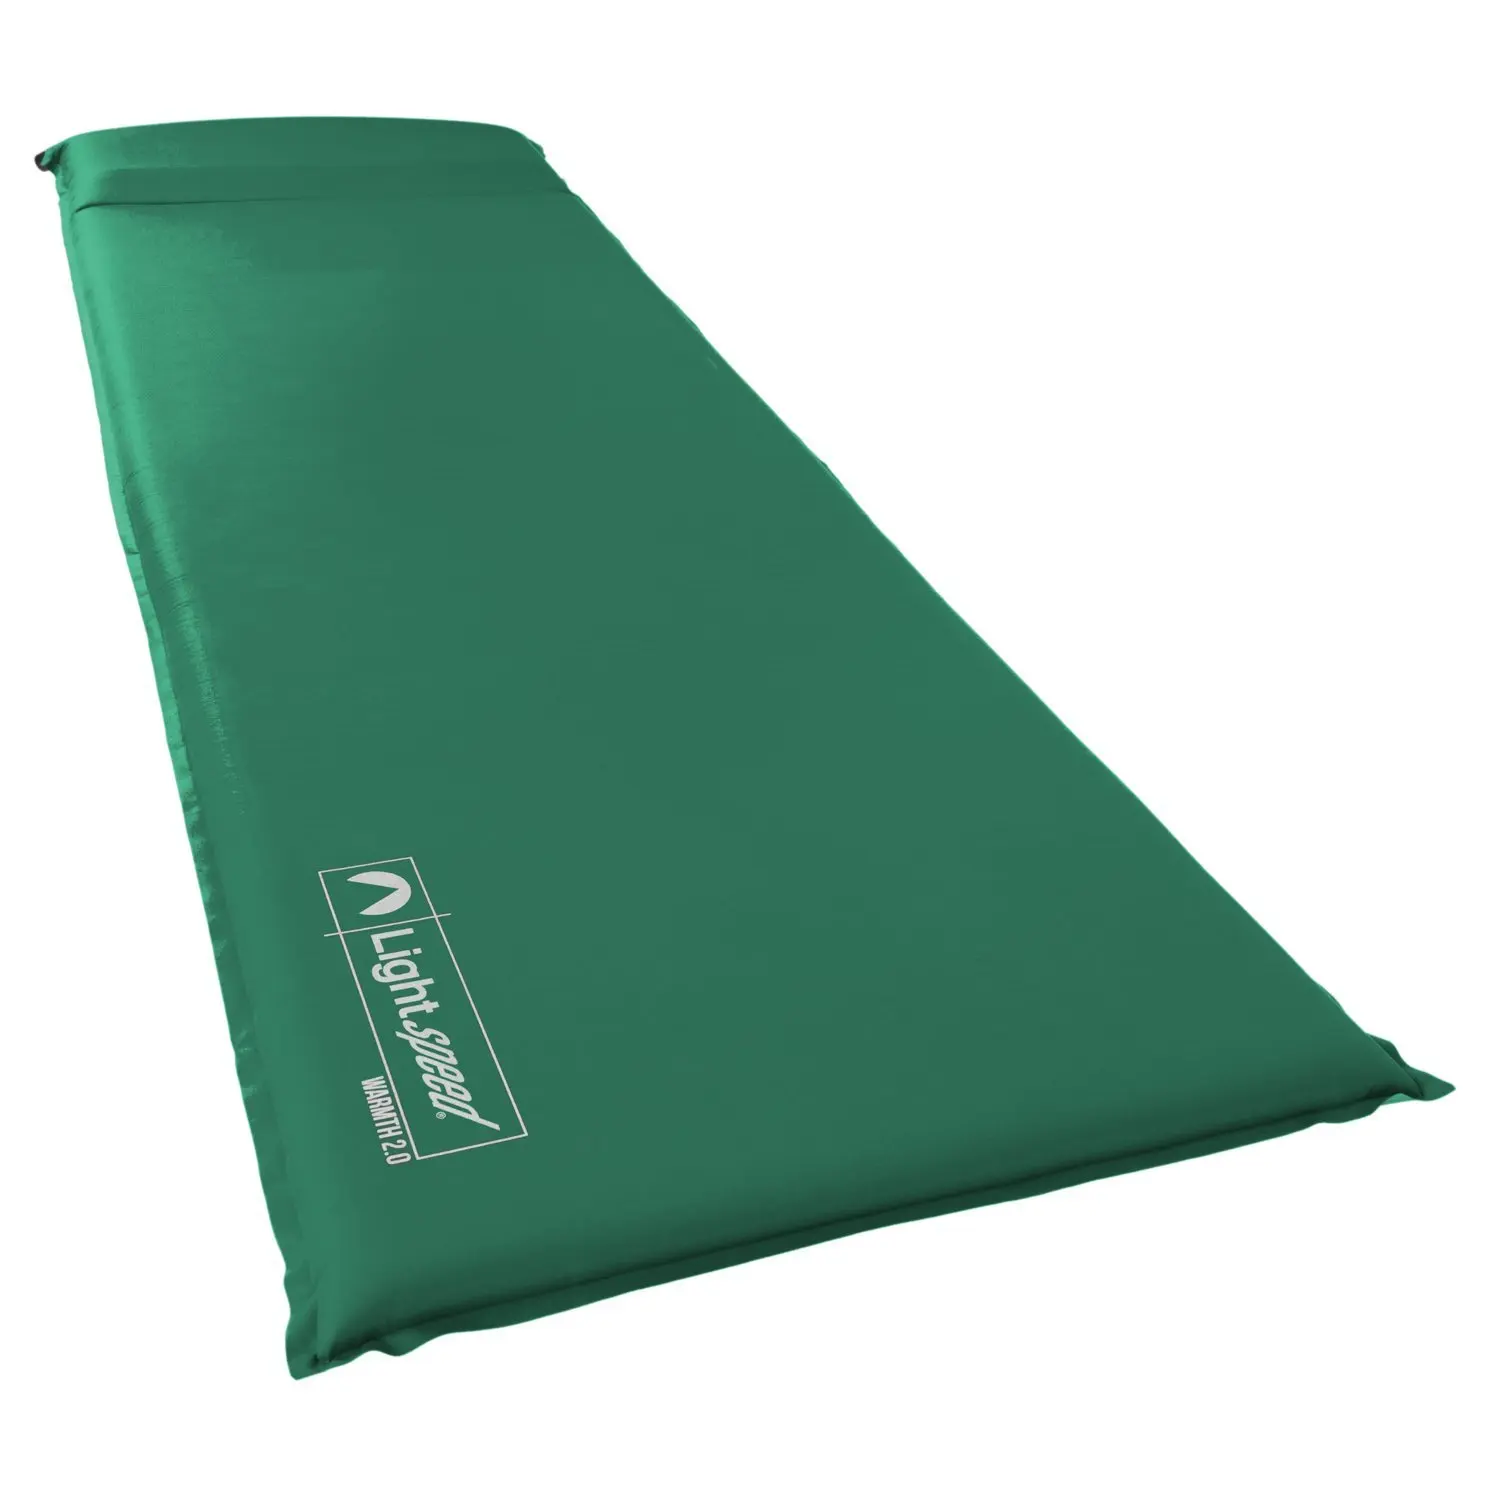 Buy Lightspeed Outdoors PVC-Free Self Inflating Camp Sleep Pad in Cheap Price on Alibaba.com